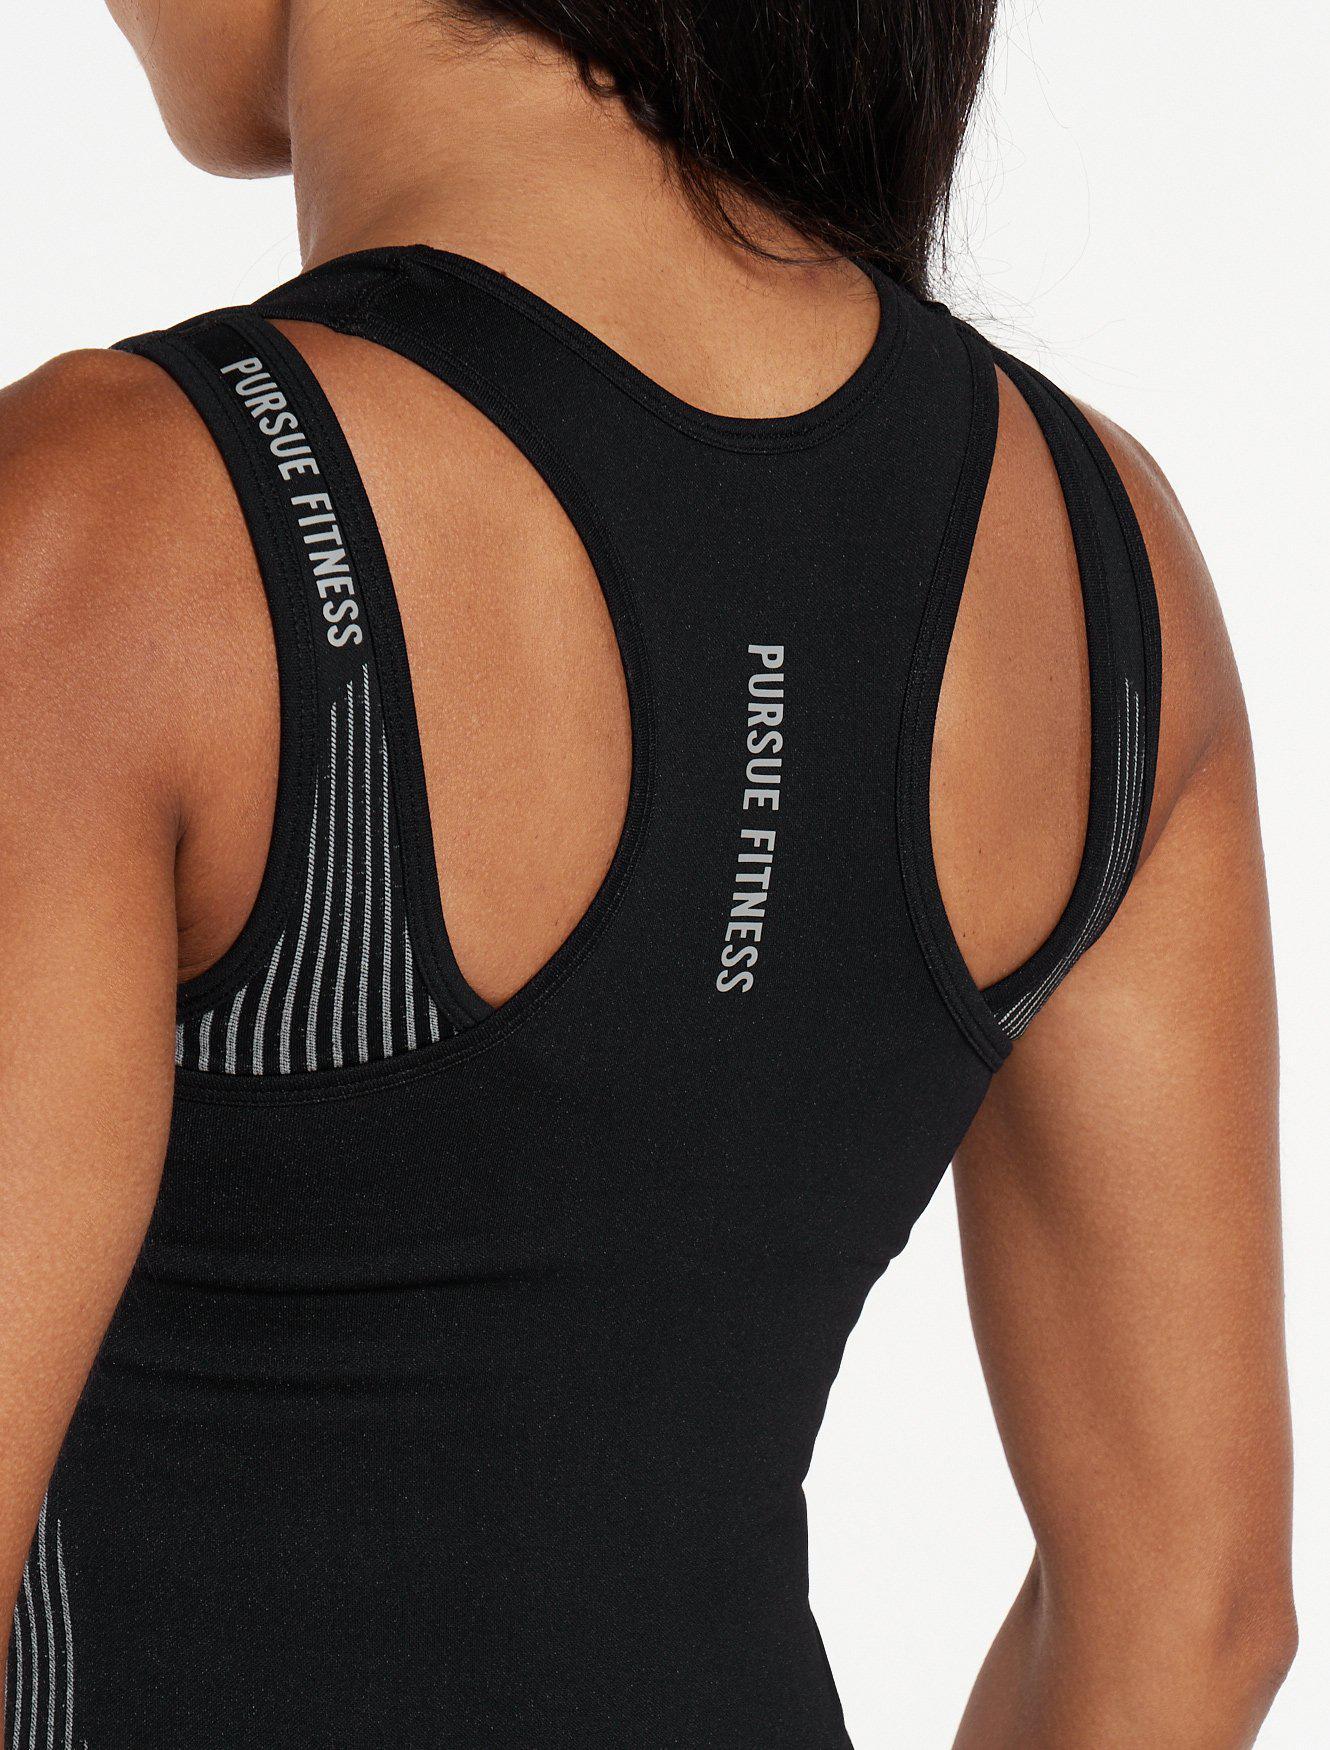 ADAPT Seamless Vest / Black Pursue Fitness 4